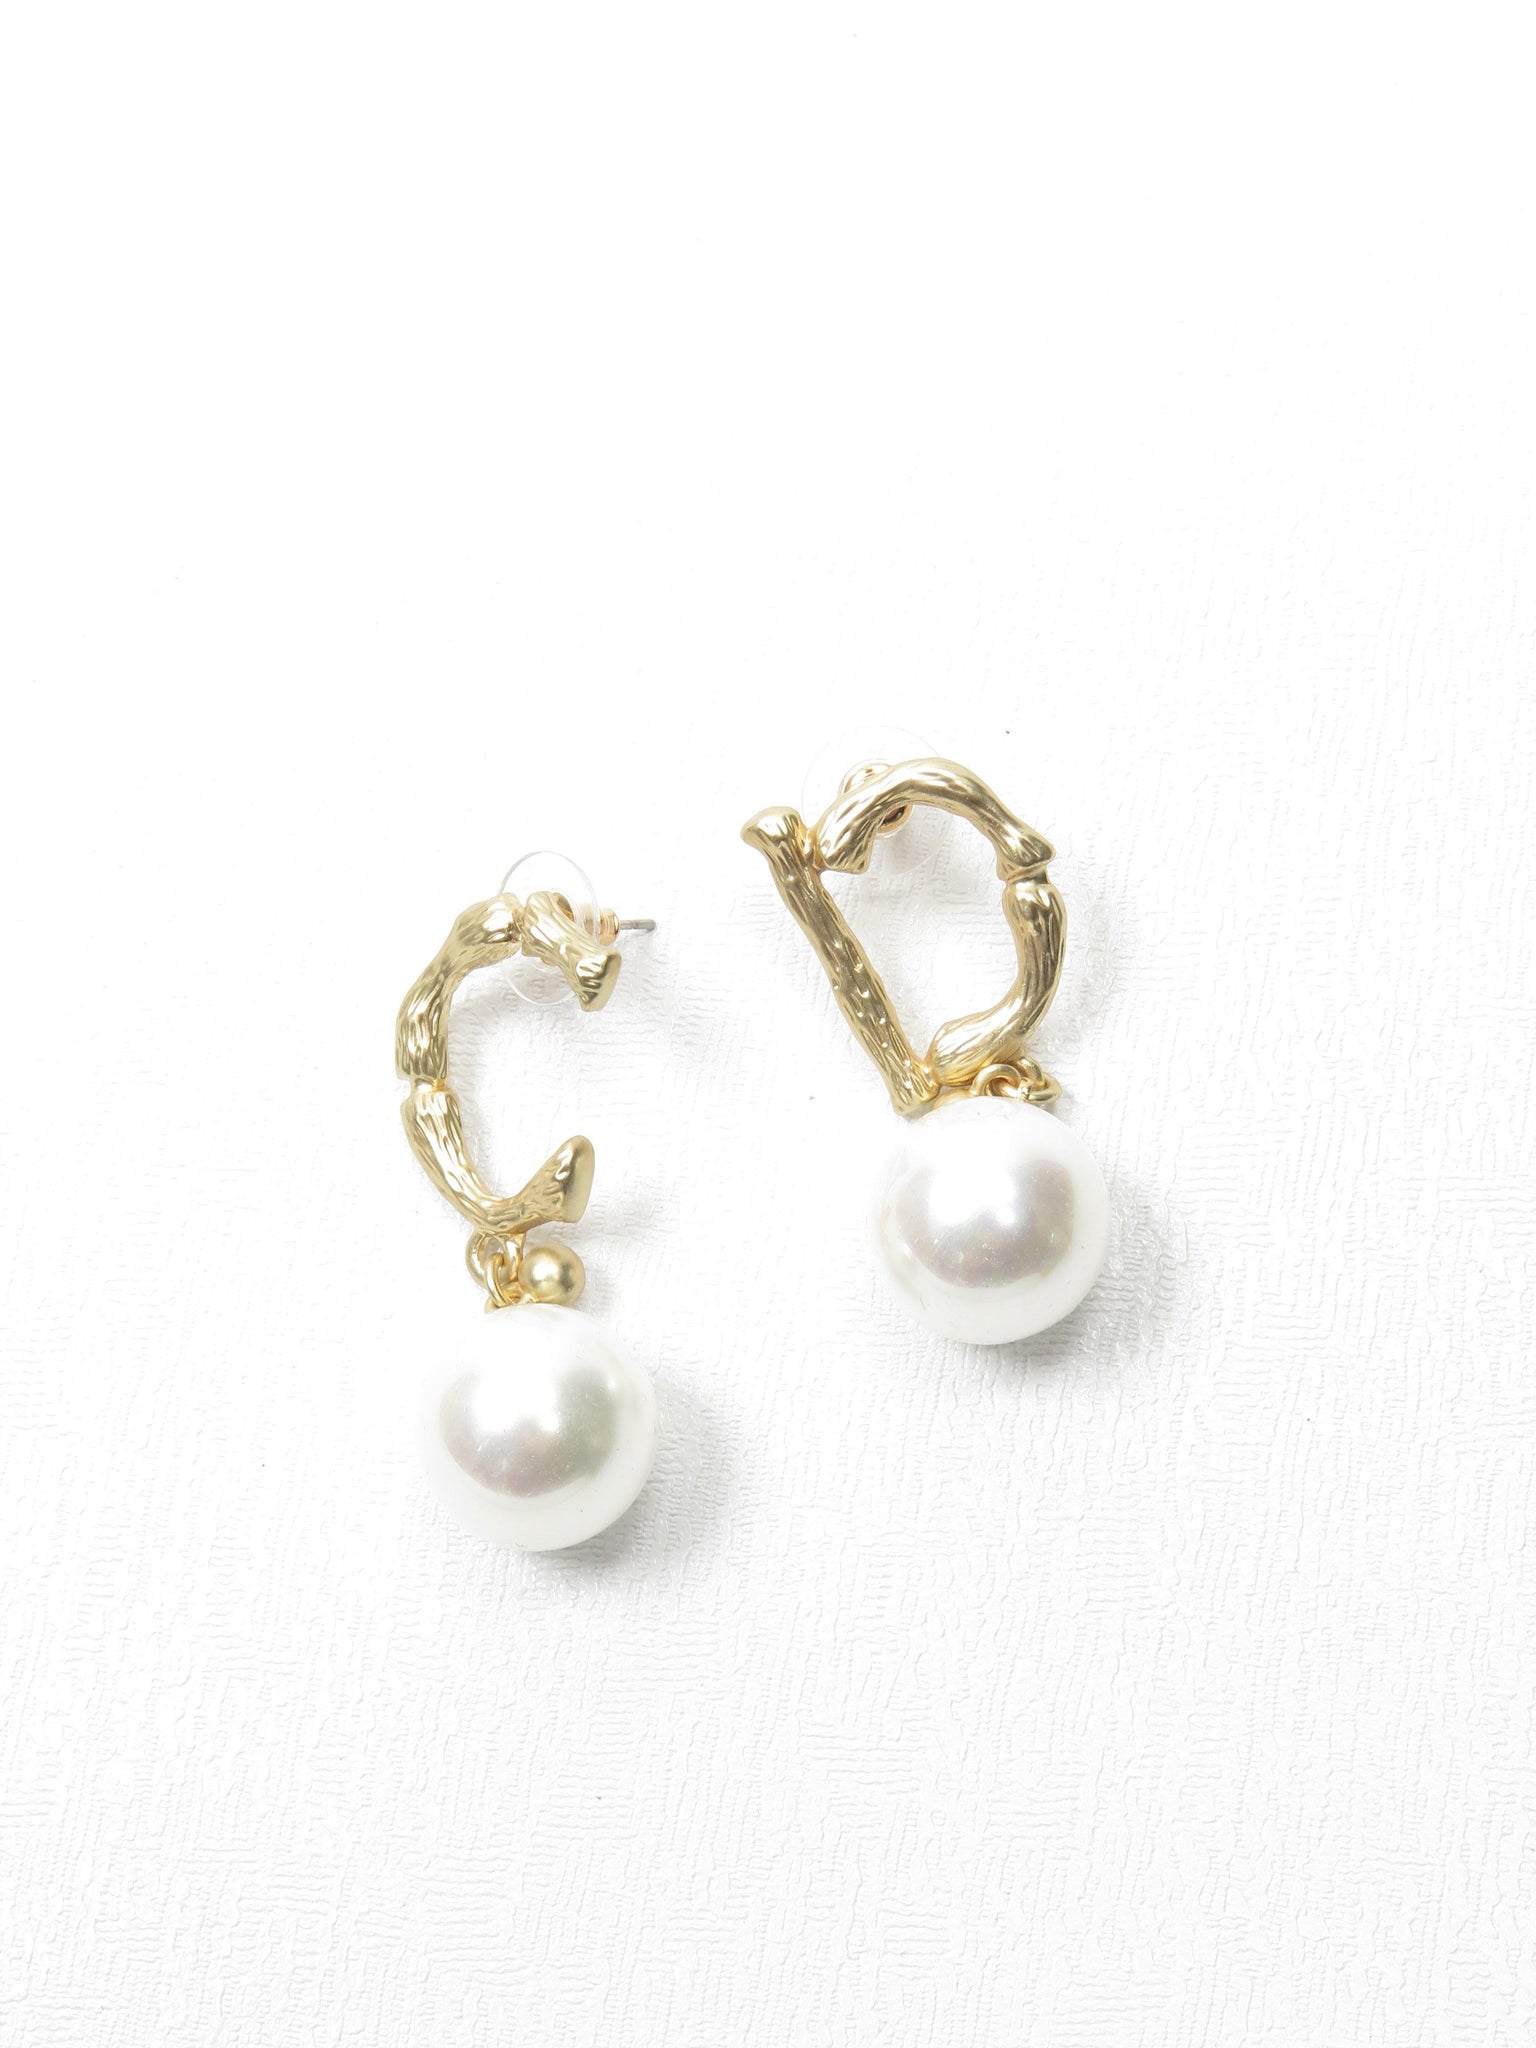 Designer Style Gold & Pearl Earrings - The Harlequin